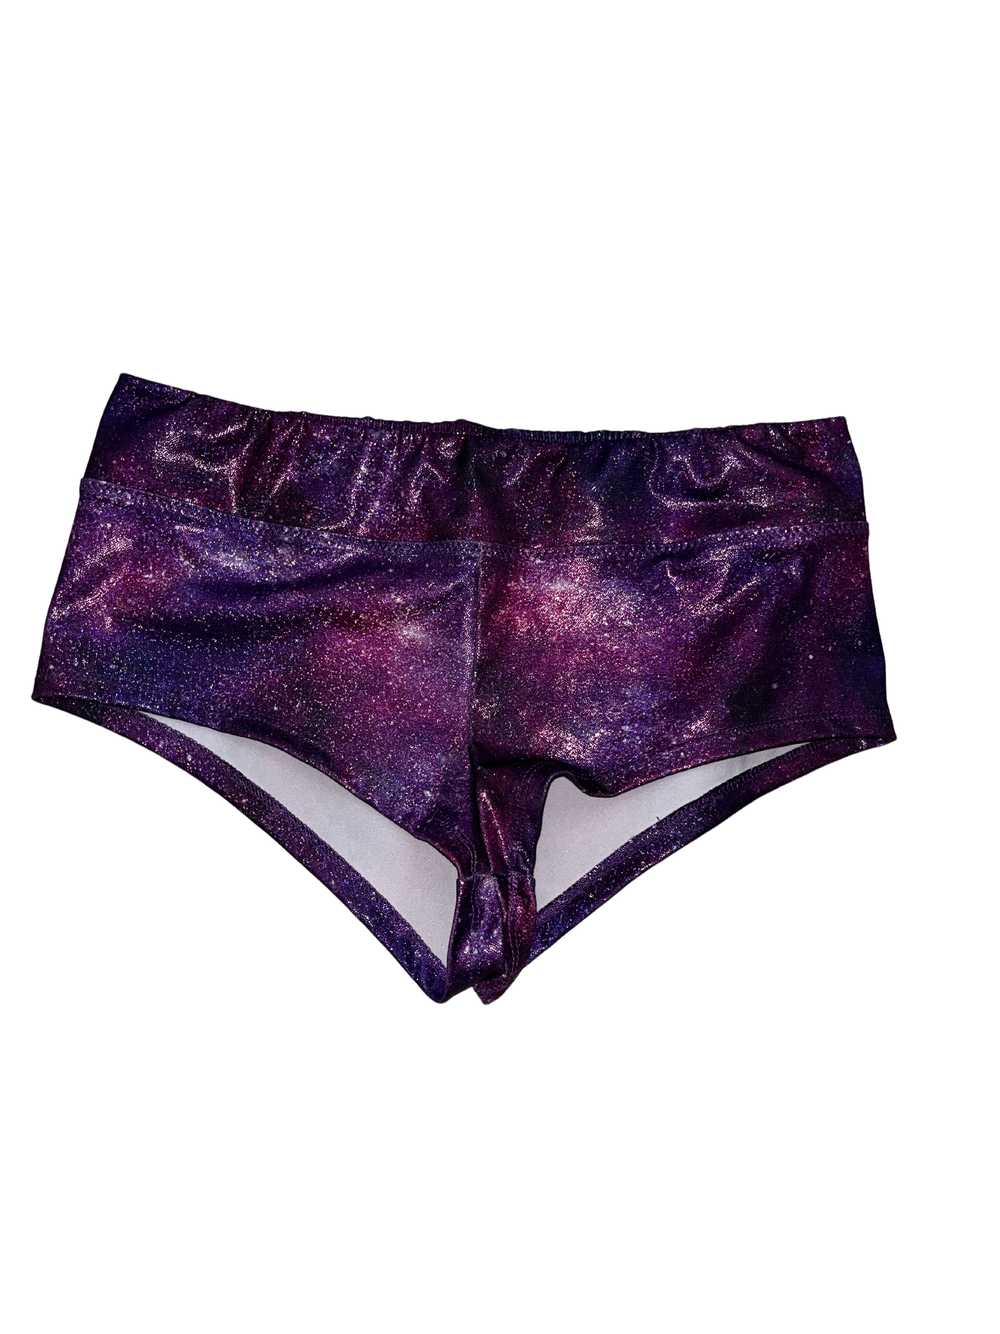 Raveival Purple galaxy cheeky shorts - image 3